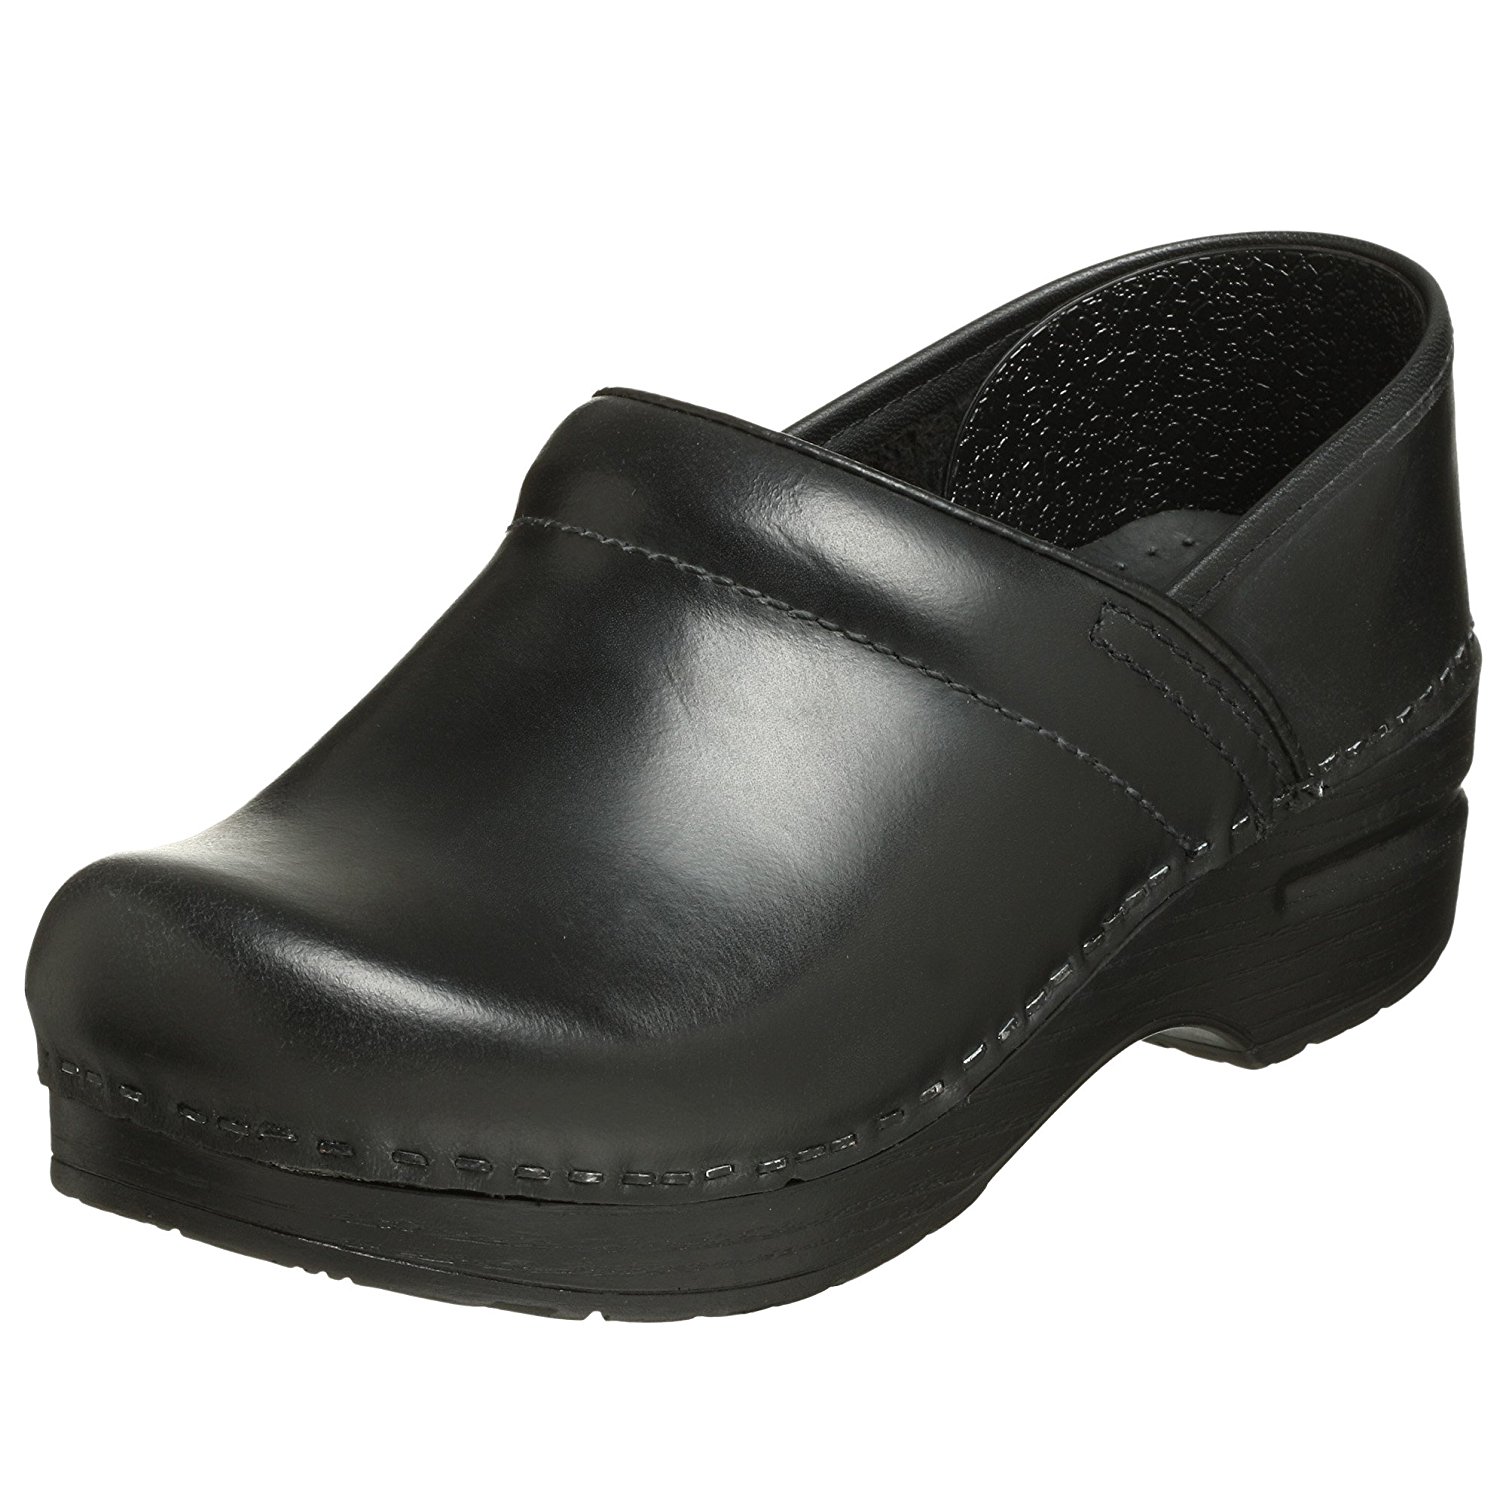 Dansko Womens Professional Leather Closed Toe Clogs, Black Cabrio, Size ...